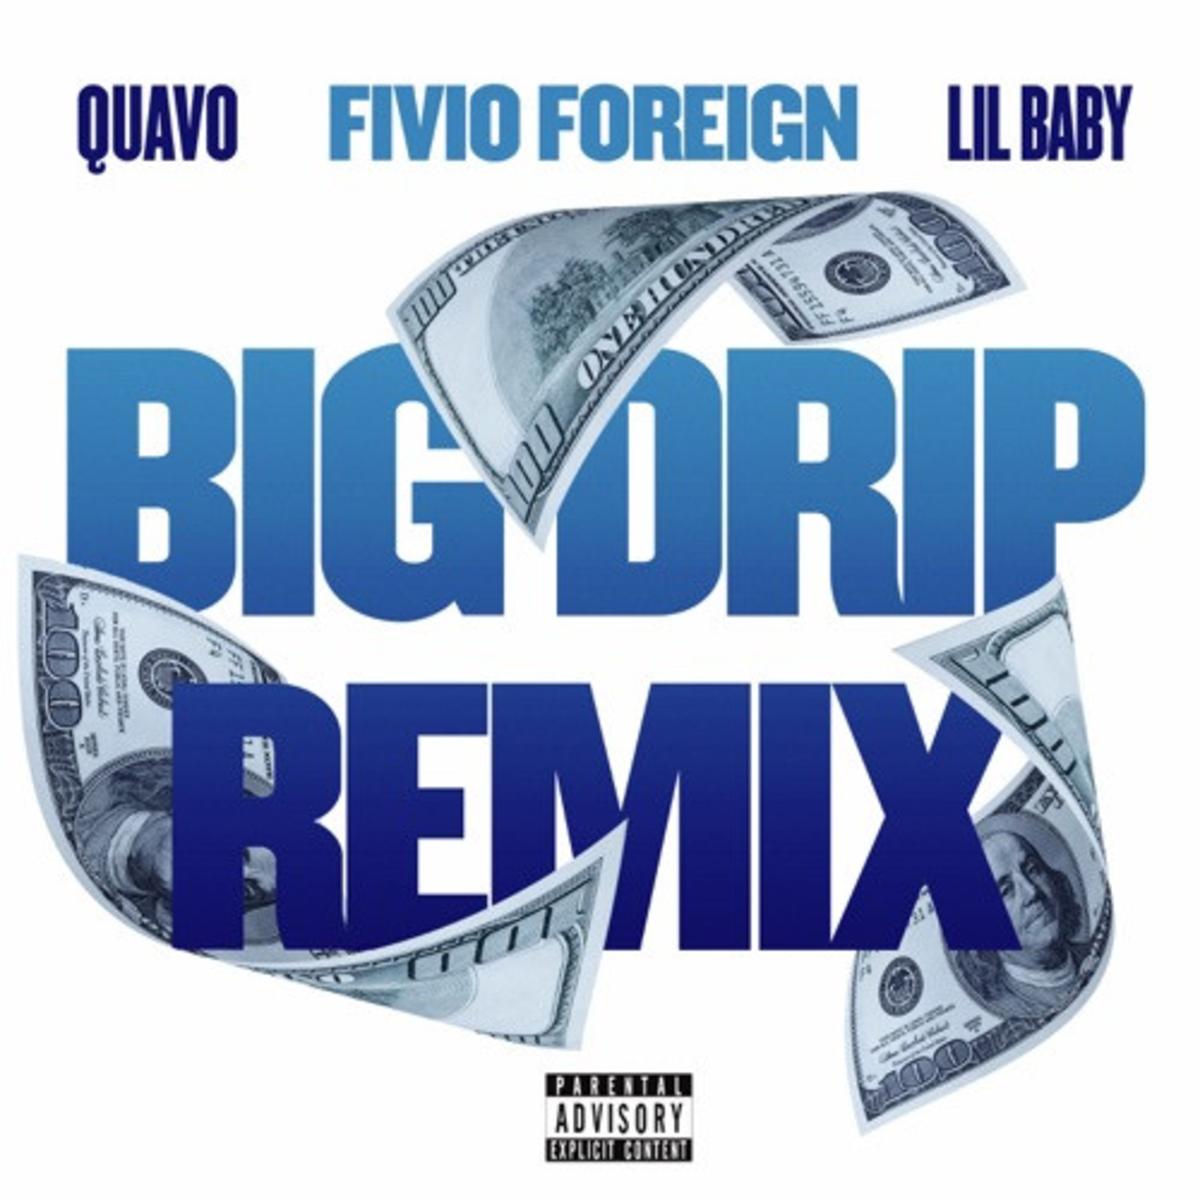 Fivio Foreign Recruits Lil Baby & Quavo For “Big Drip (Remix)”